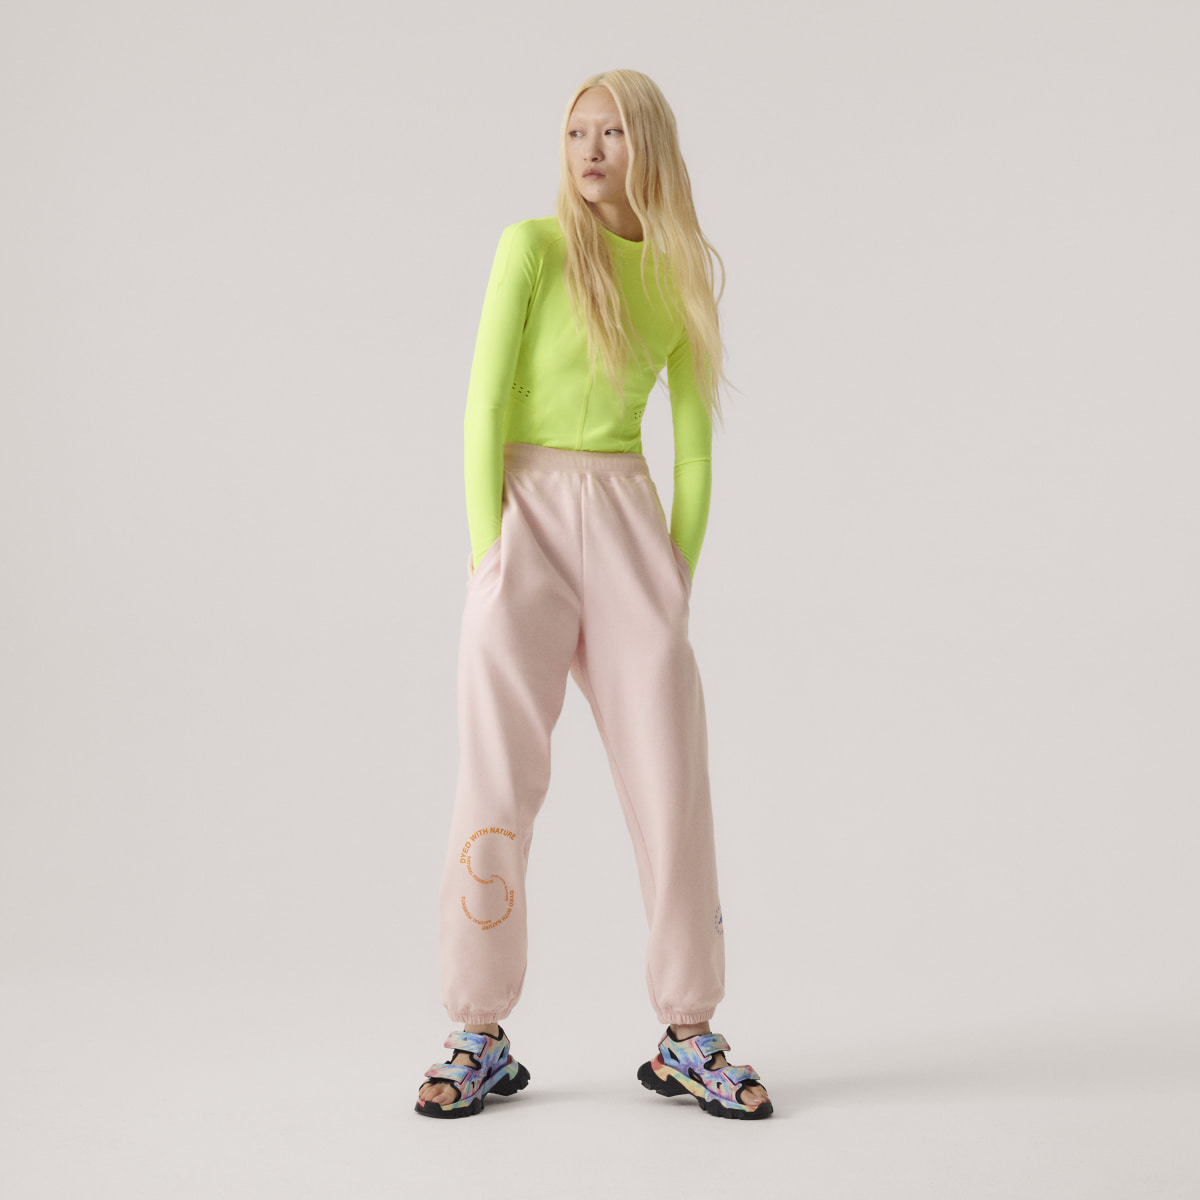 Adidas by Stella McCartney Sportswear Joggers (Gender Neutral). 7